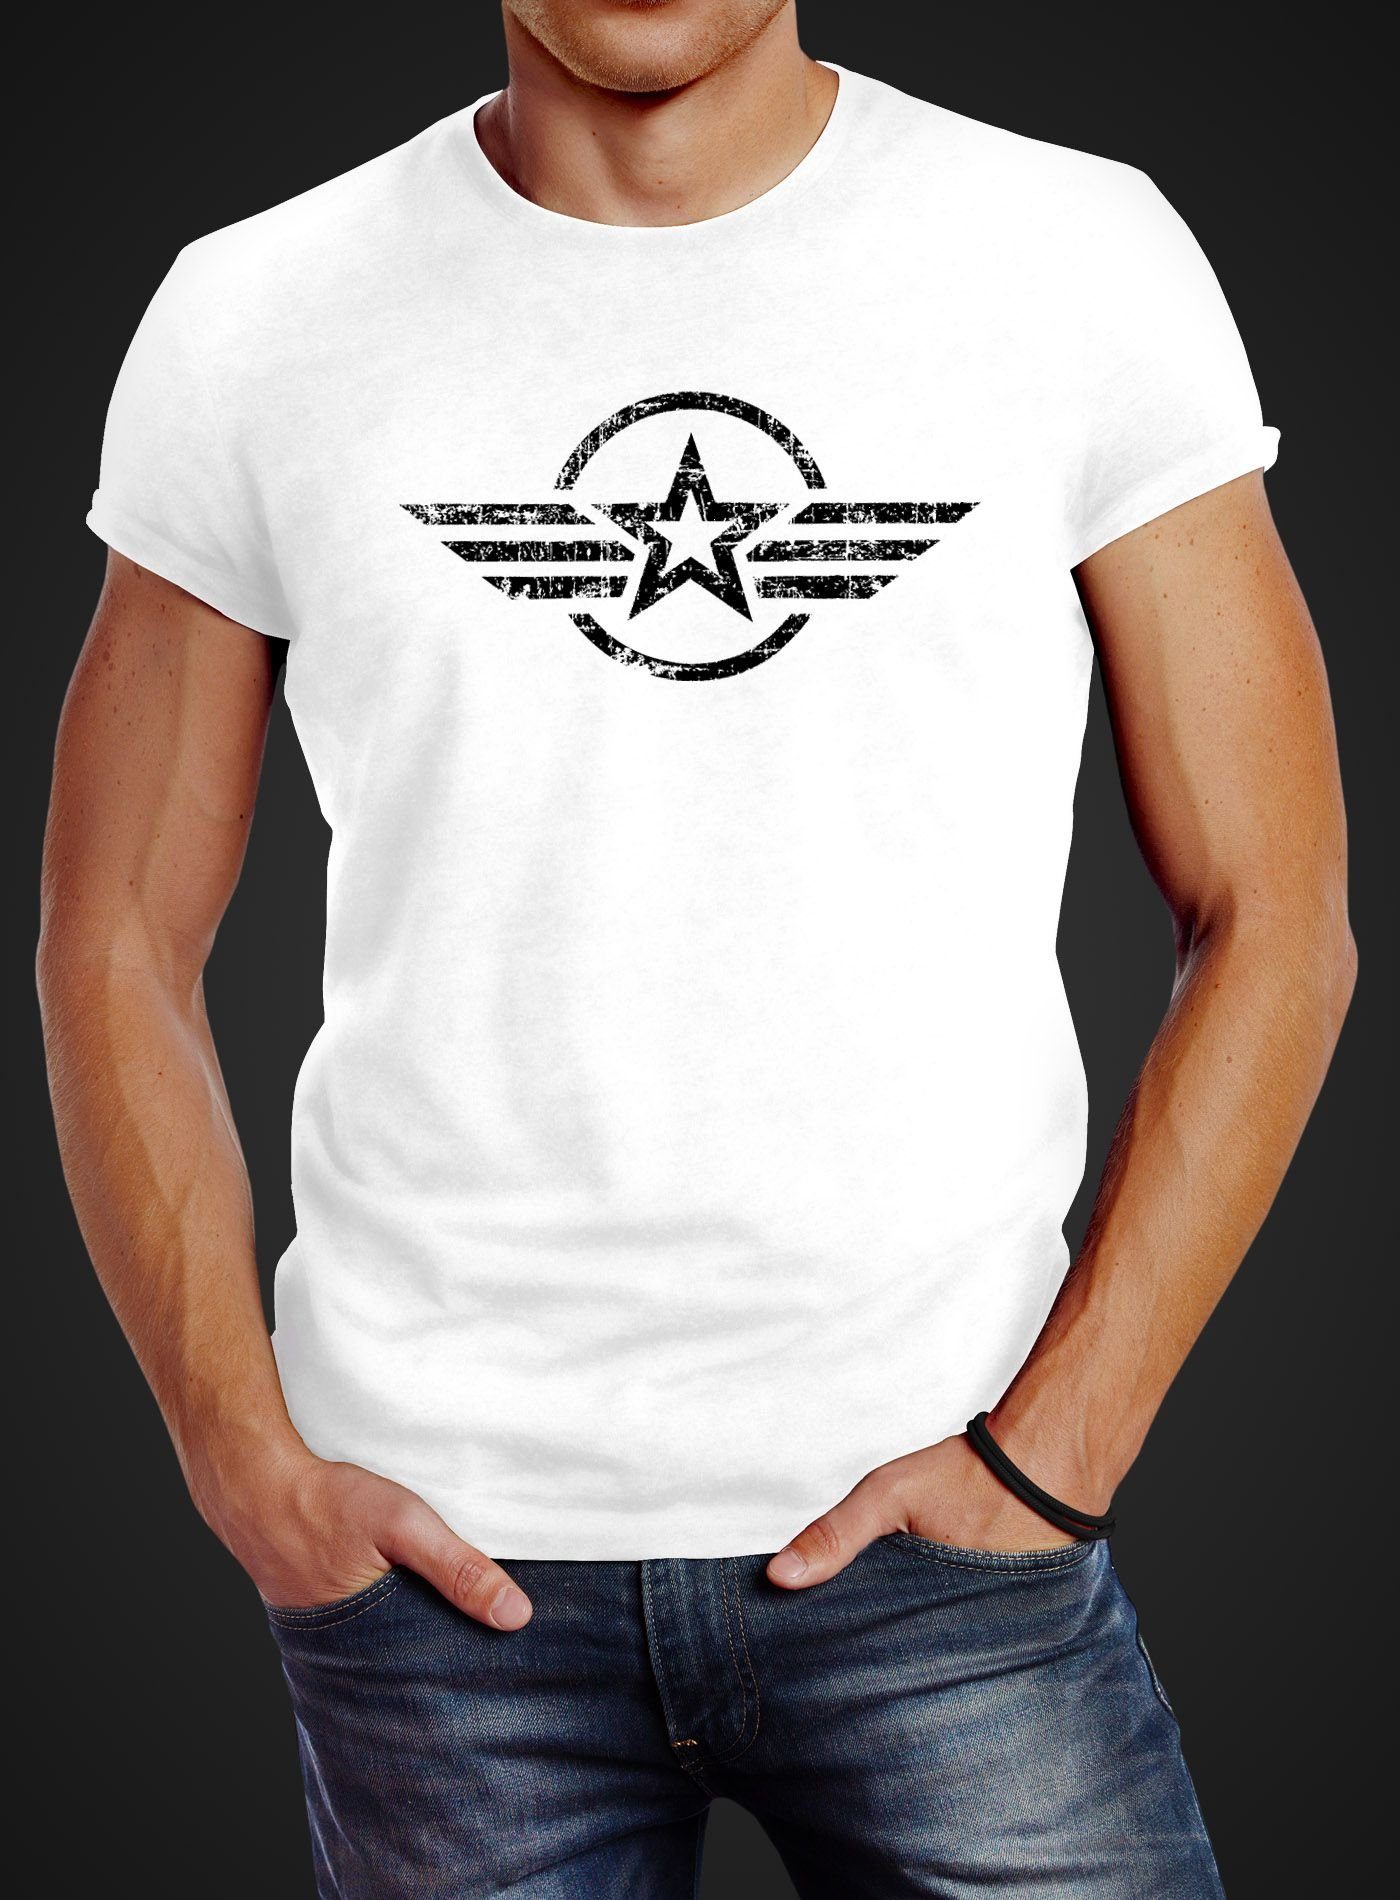 Print Fashion Neverless mit T-Shirt Airforce weiß Herren Aufdruck Streetstyle Print-Shirt Emblem Neverless®